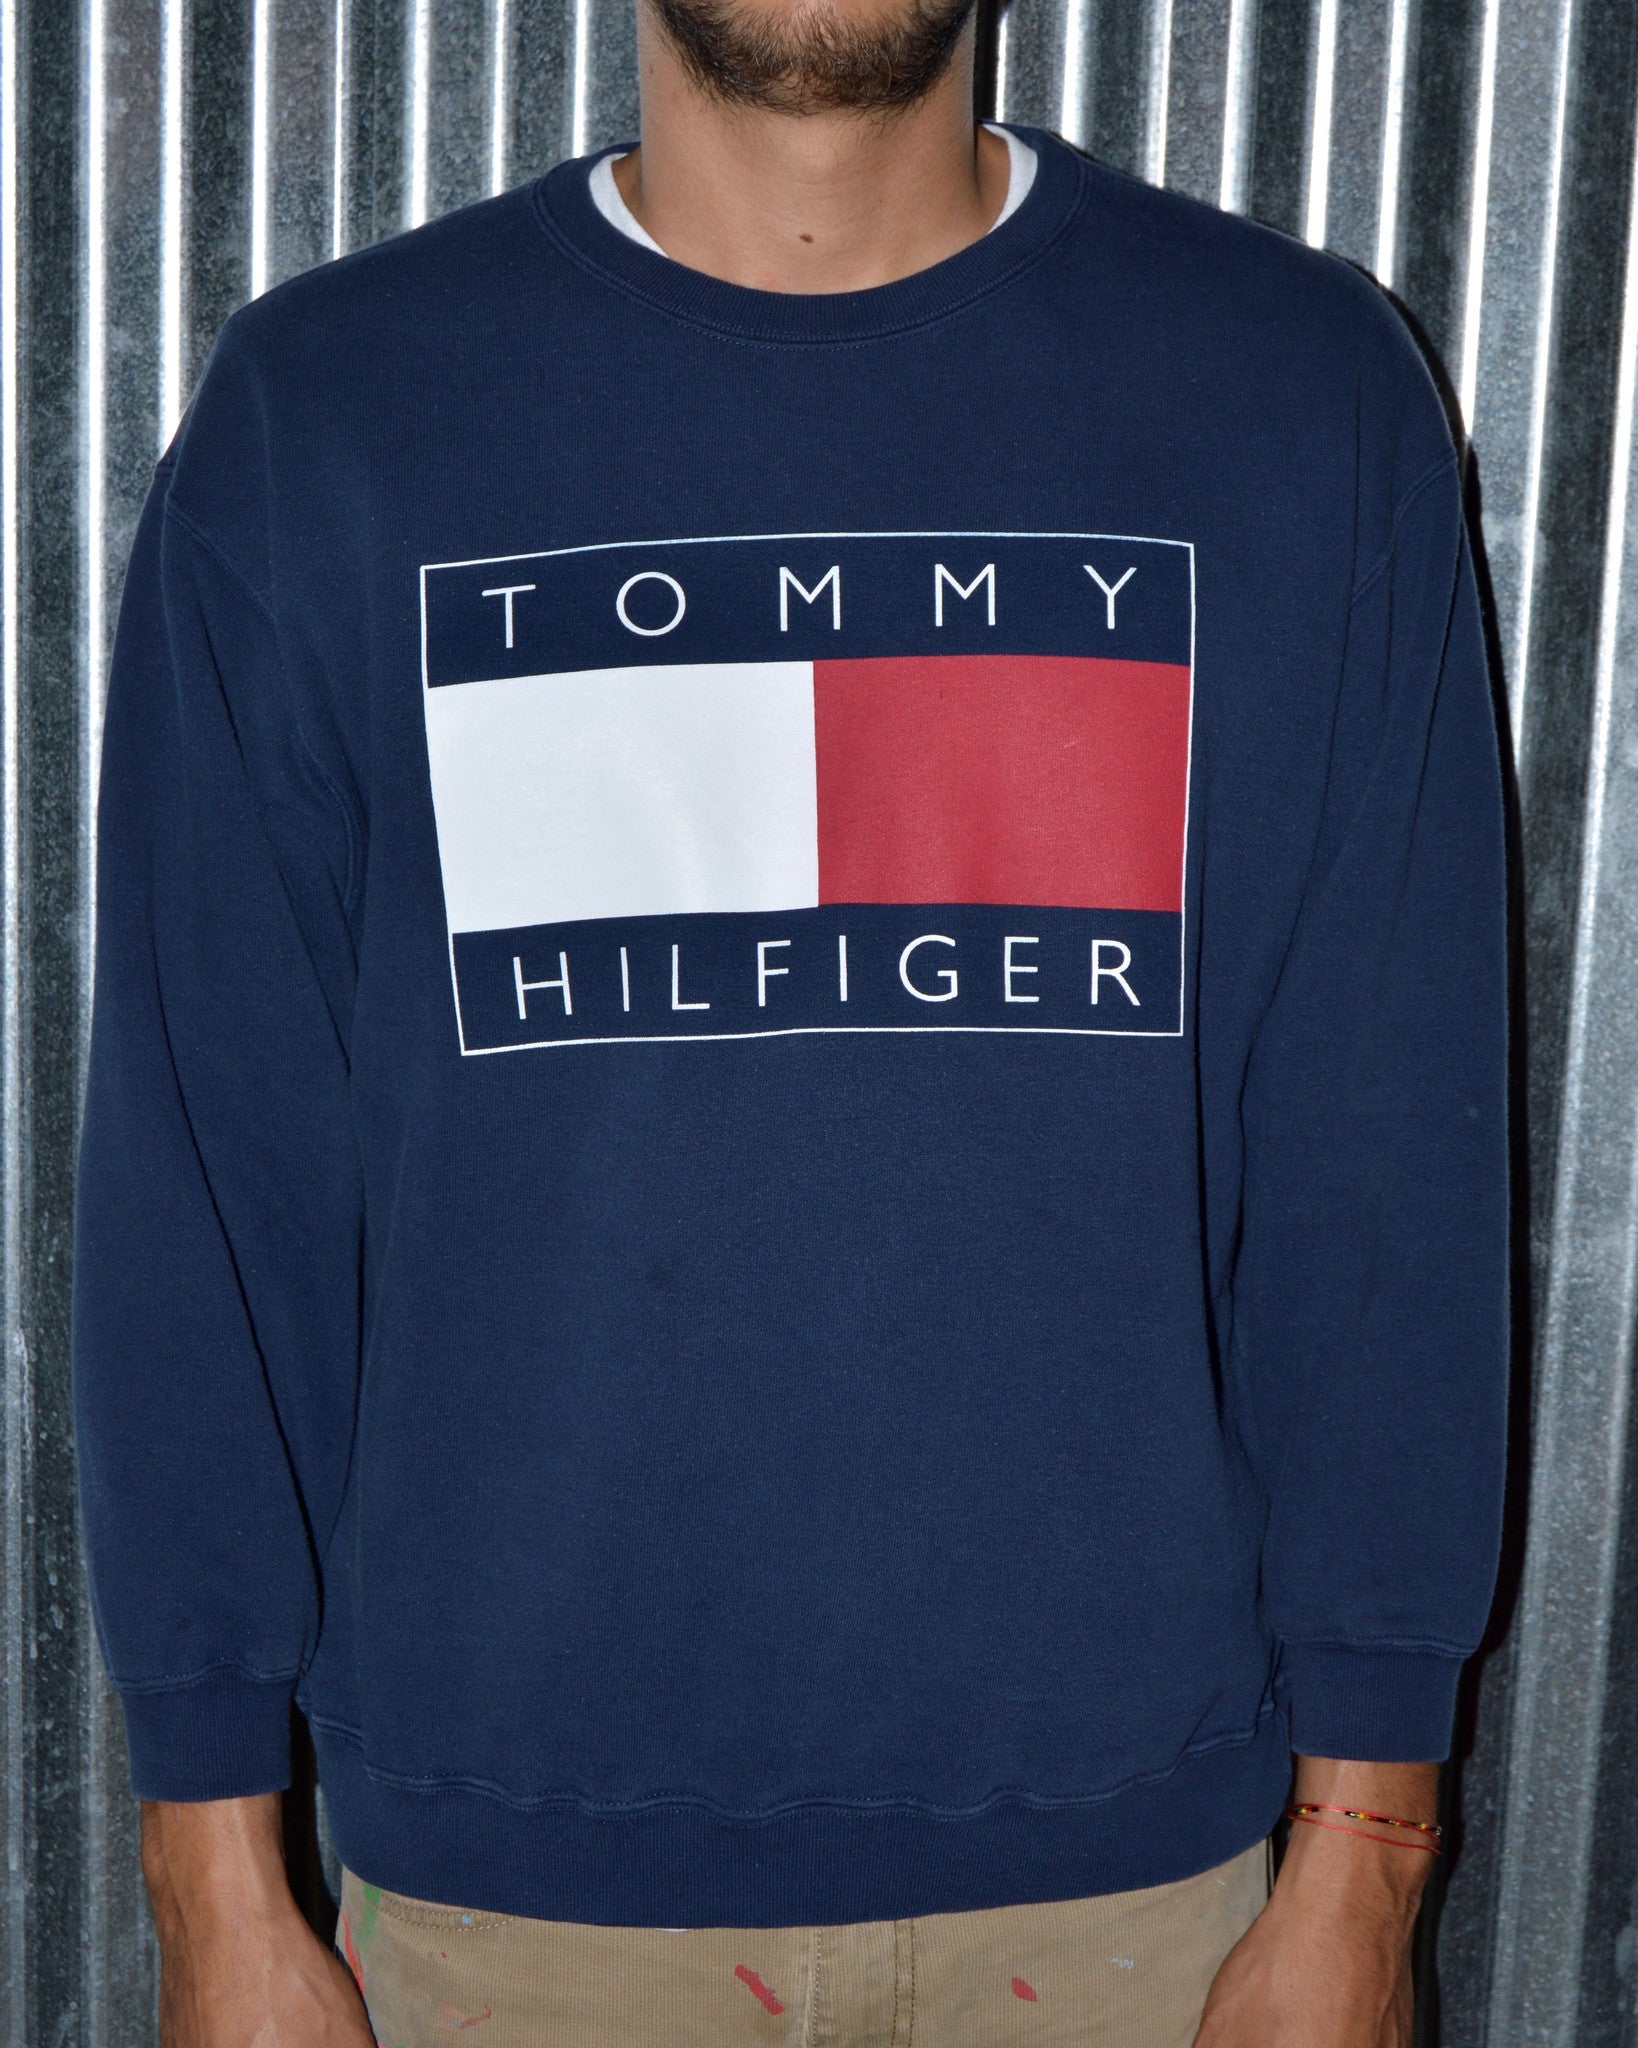 Hilfiger Tommy Sweatshirt Navy PeoplesVintage Logo sz Blue – L Vintage